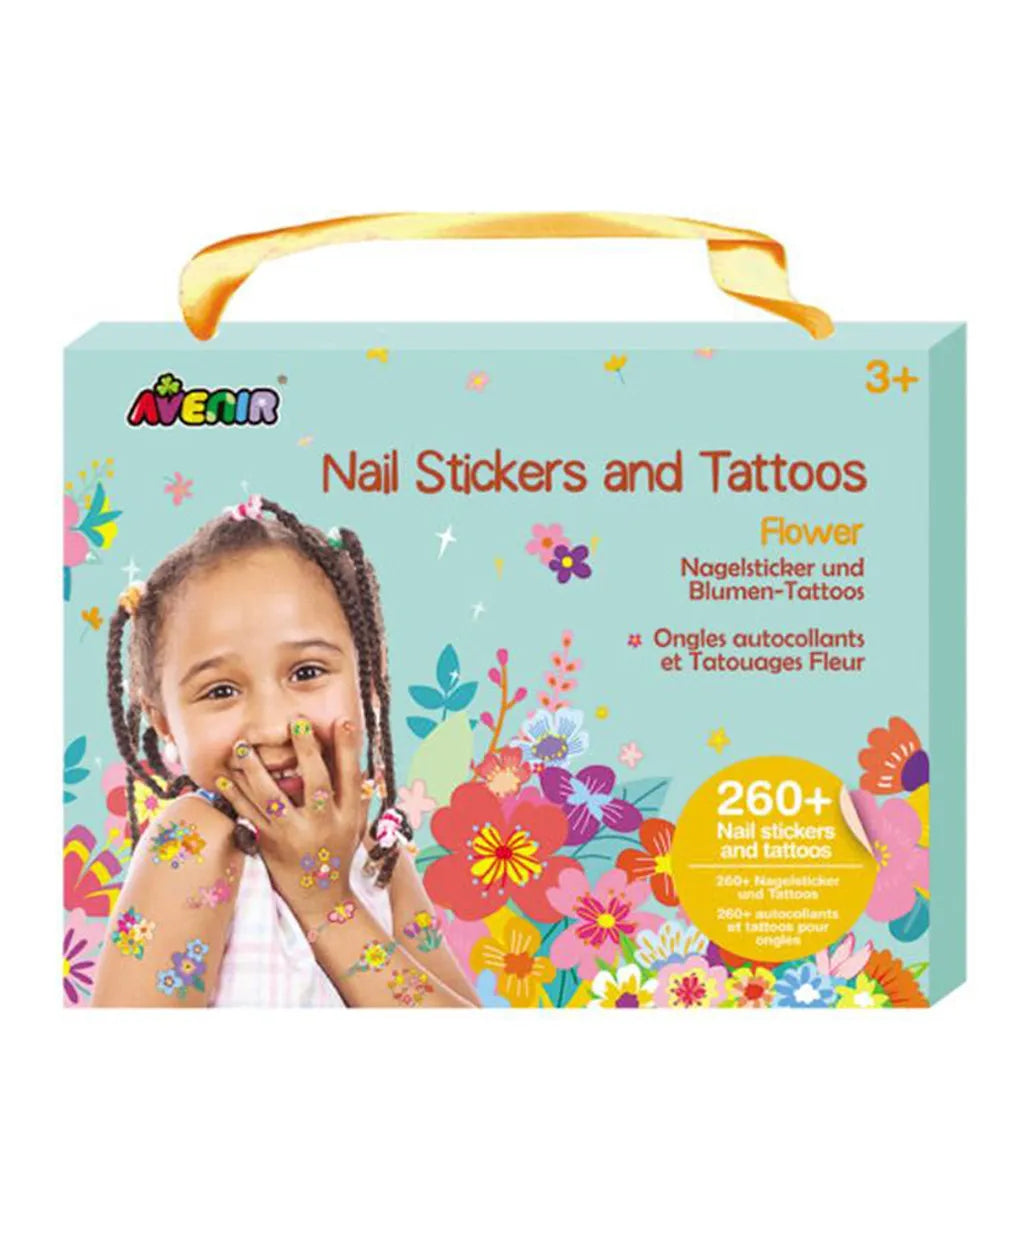 Avenir Nail Stickers and Tattoos Kit - Flower - Laadlee